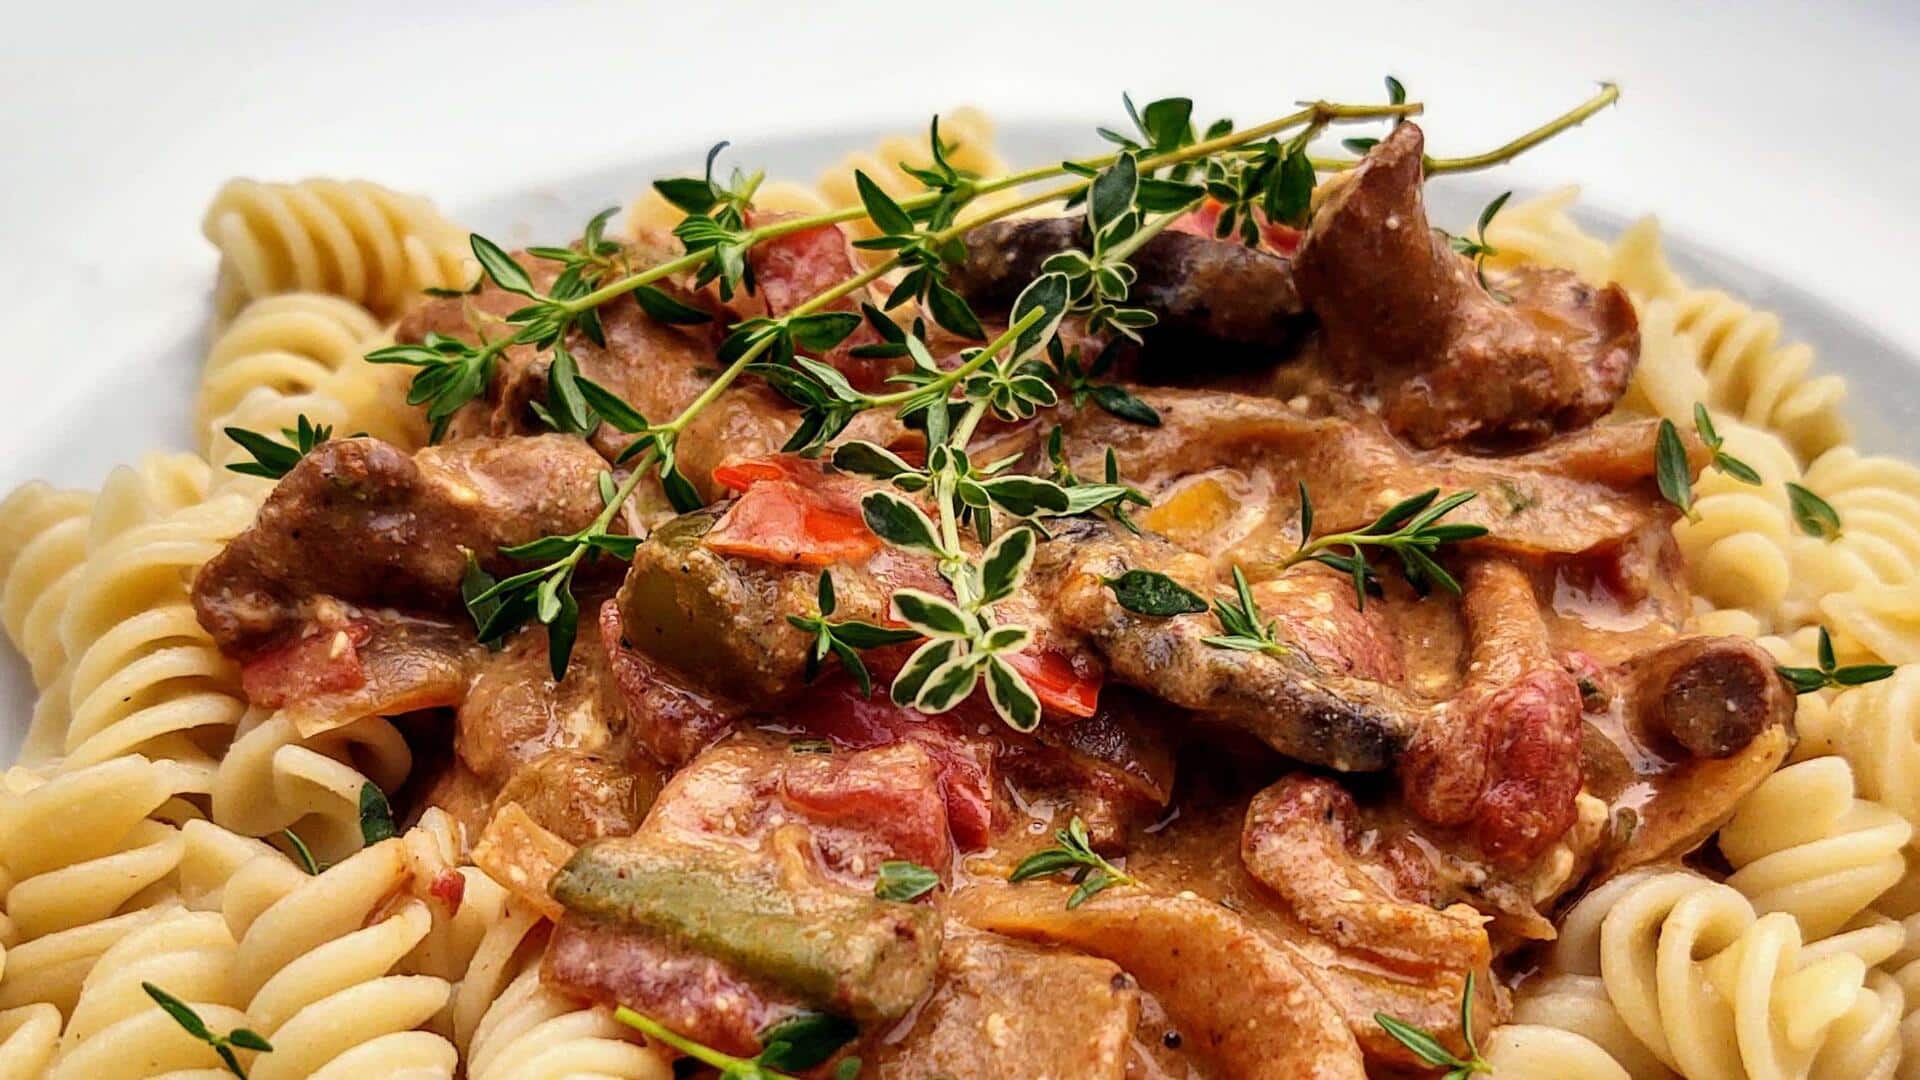 Recipe: Make Hungarian mushroom paprikash at home